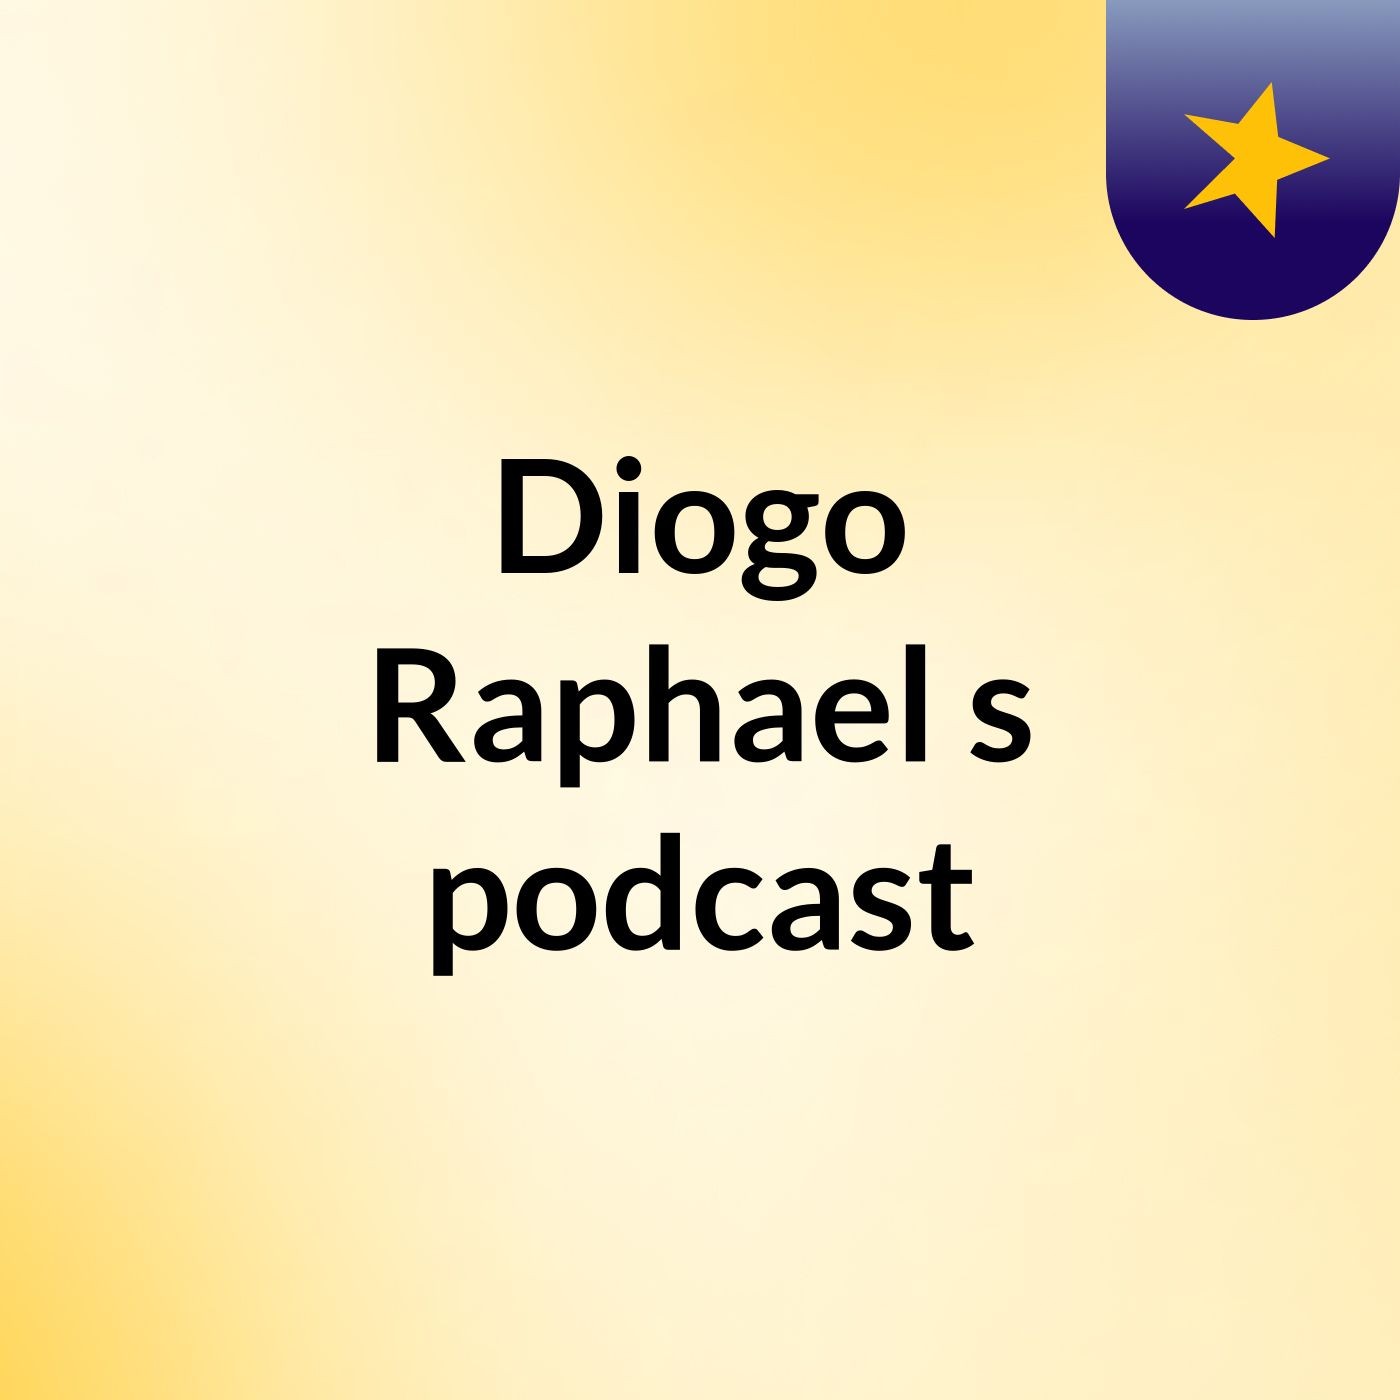 Diogo Raphael's podcast